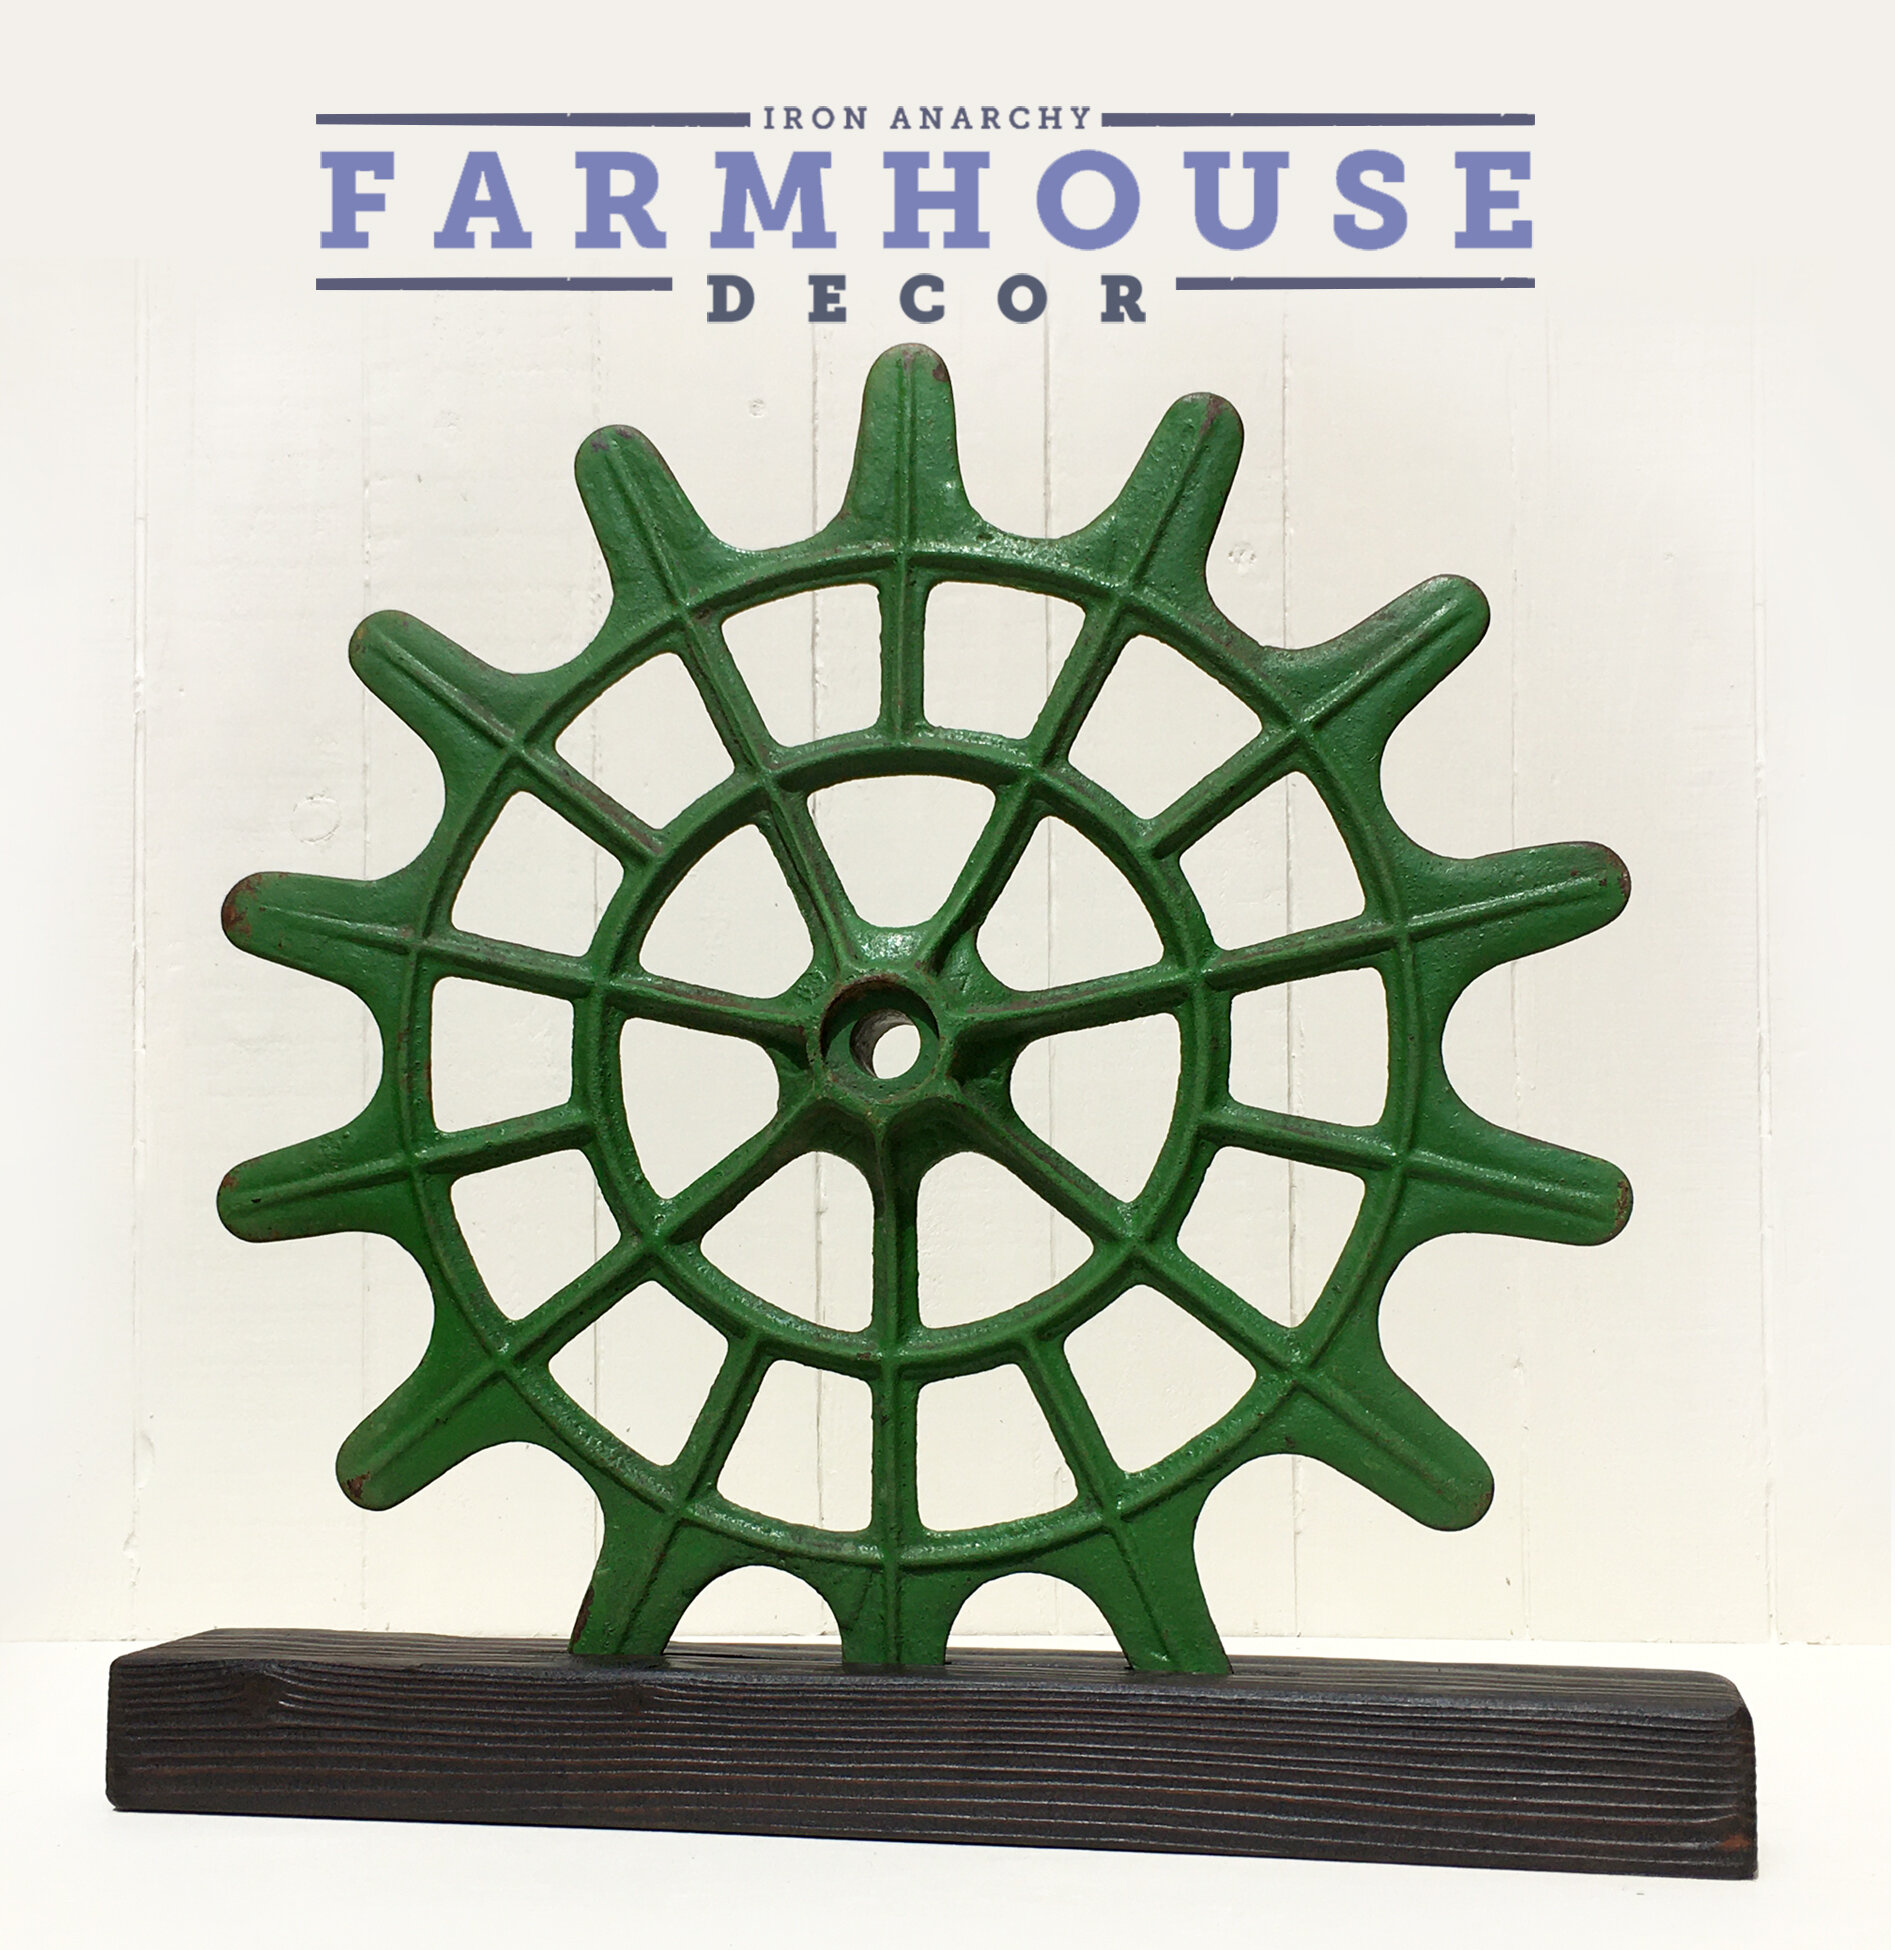 Vintage Farmhouse Decor, Vintage Rotary Hoe Wheel